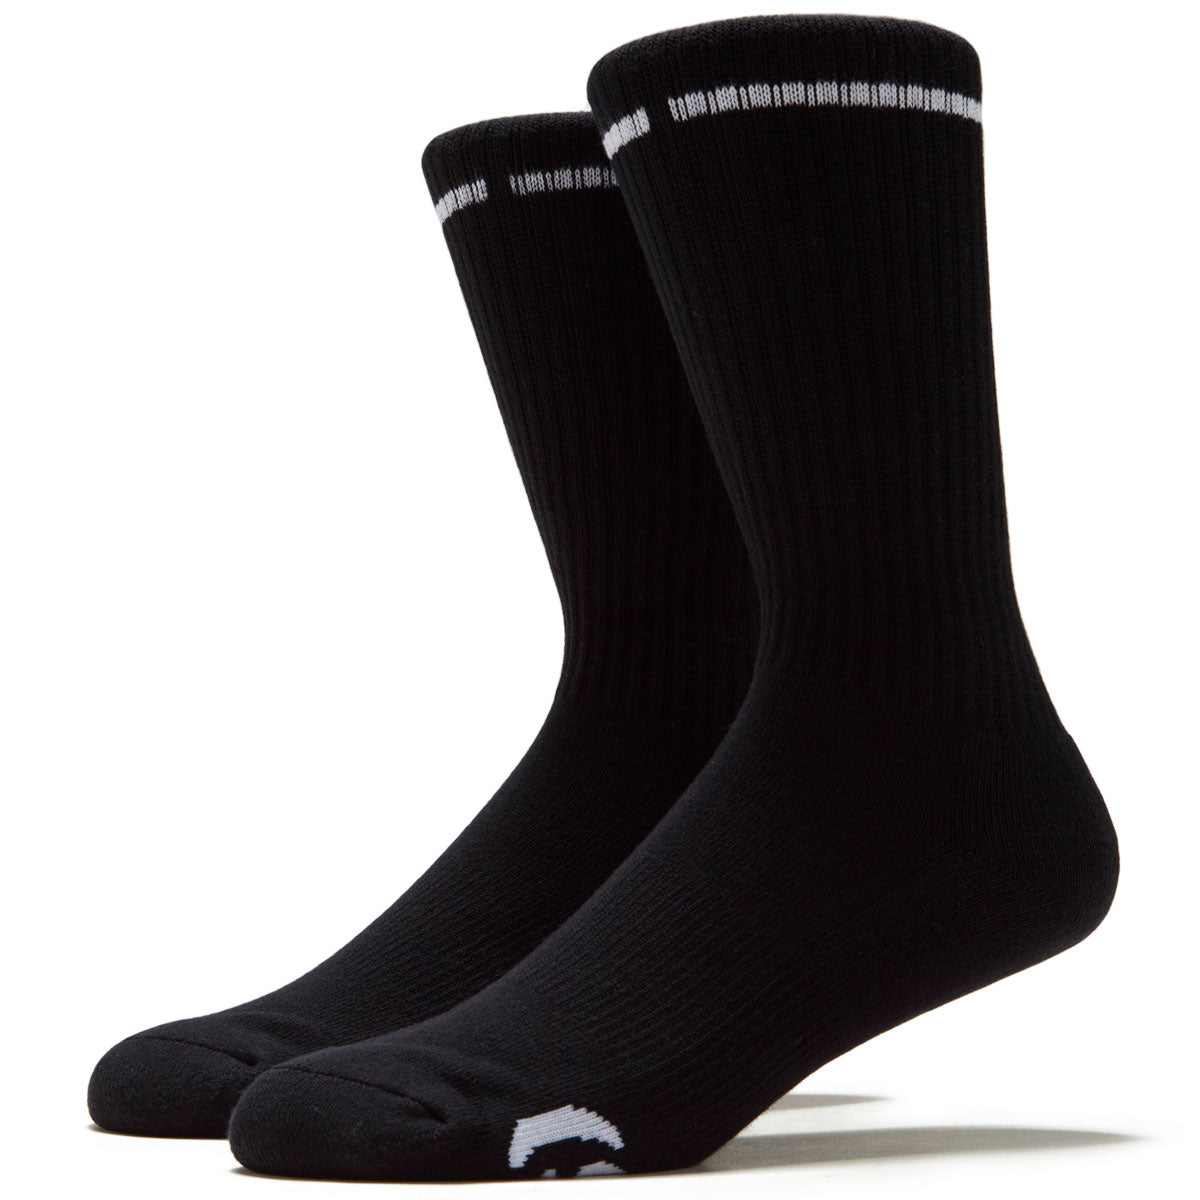 CCS Primary Socks - Black/White image 1